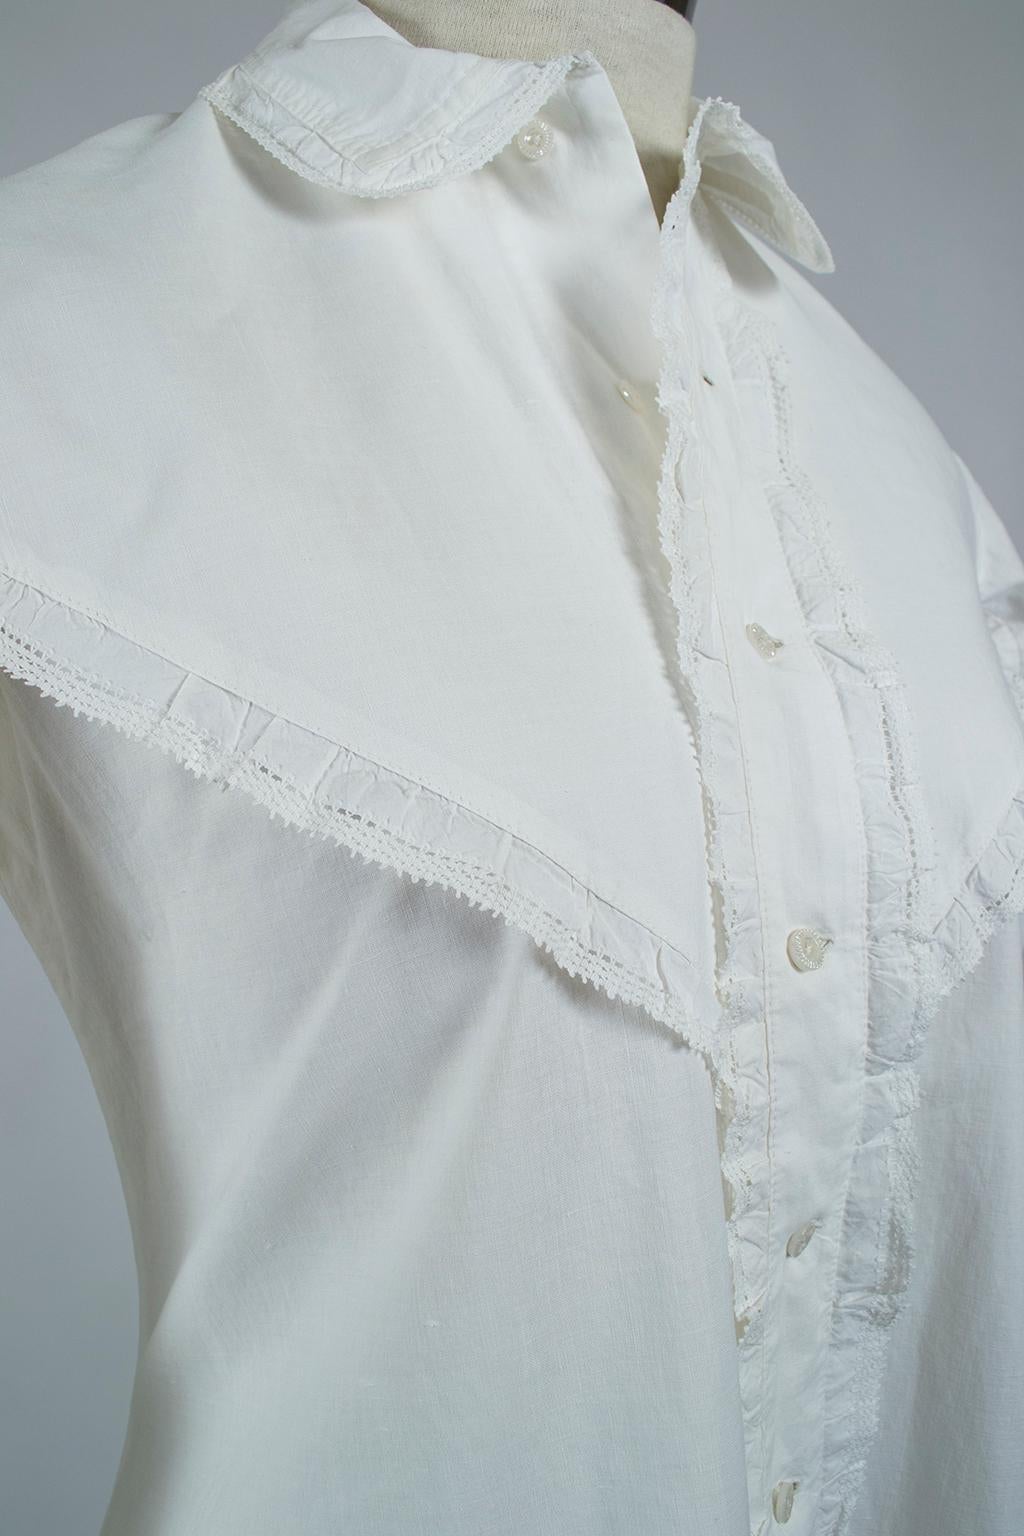 Women's Original Civil War White Western Prairie Homesteader Shirtwaist Dress -XS, 1860s For Sale